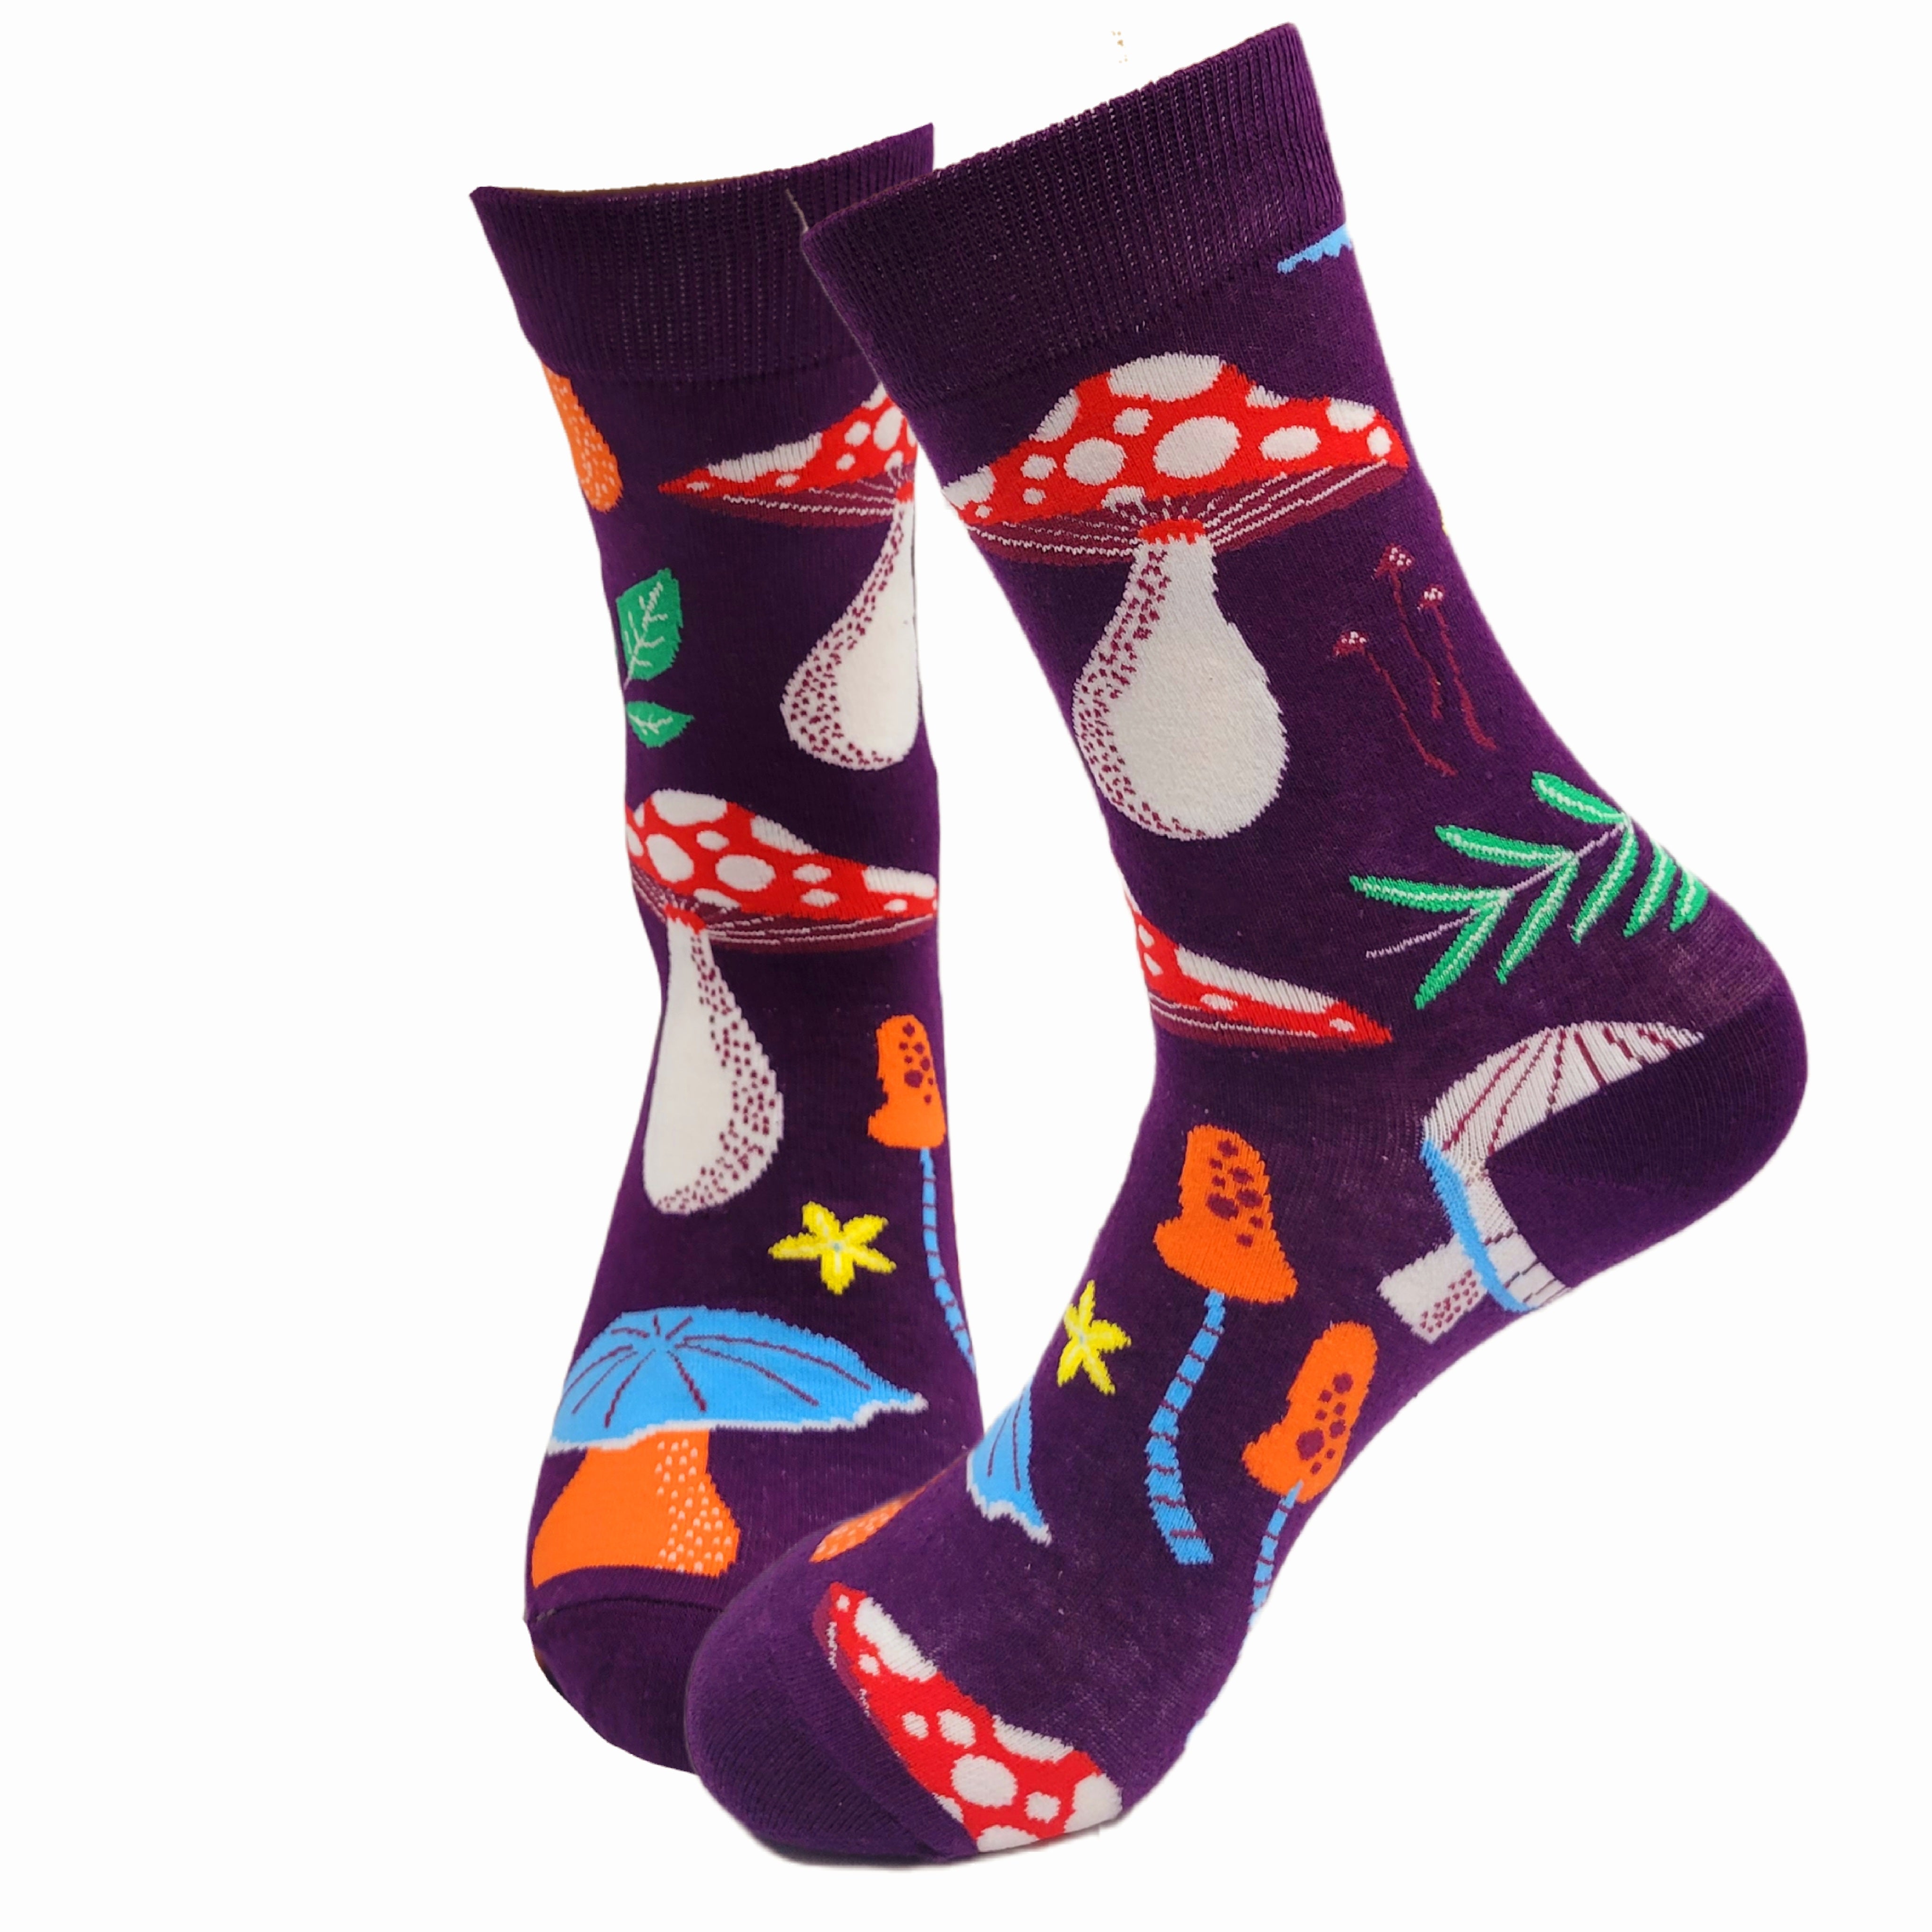 Mushroom Pattern Socks from the Sock Panda (Adult Medium)